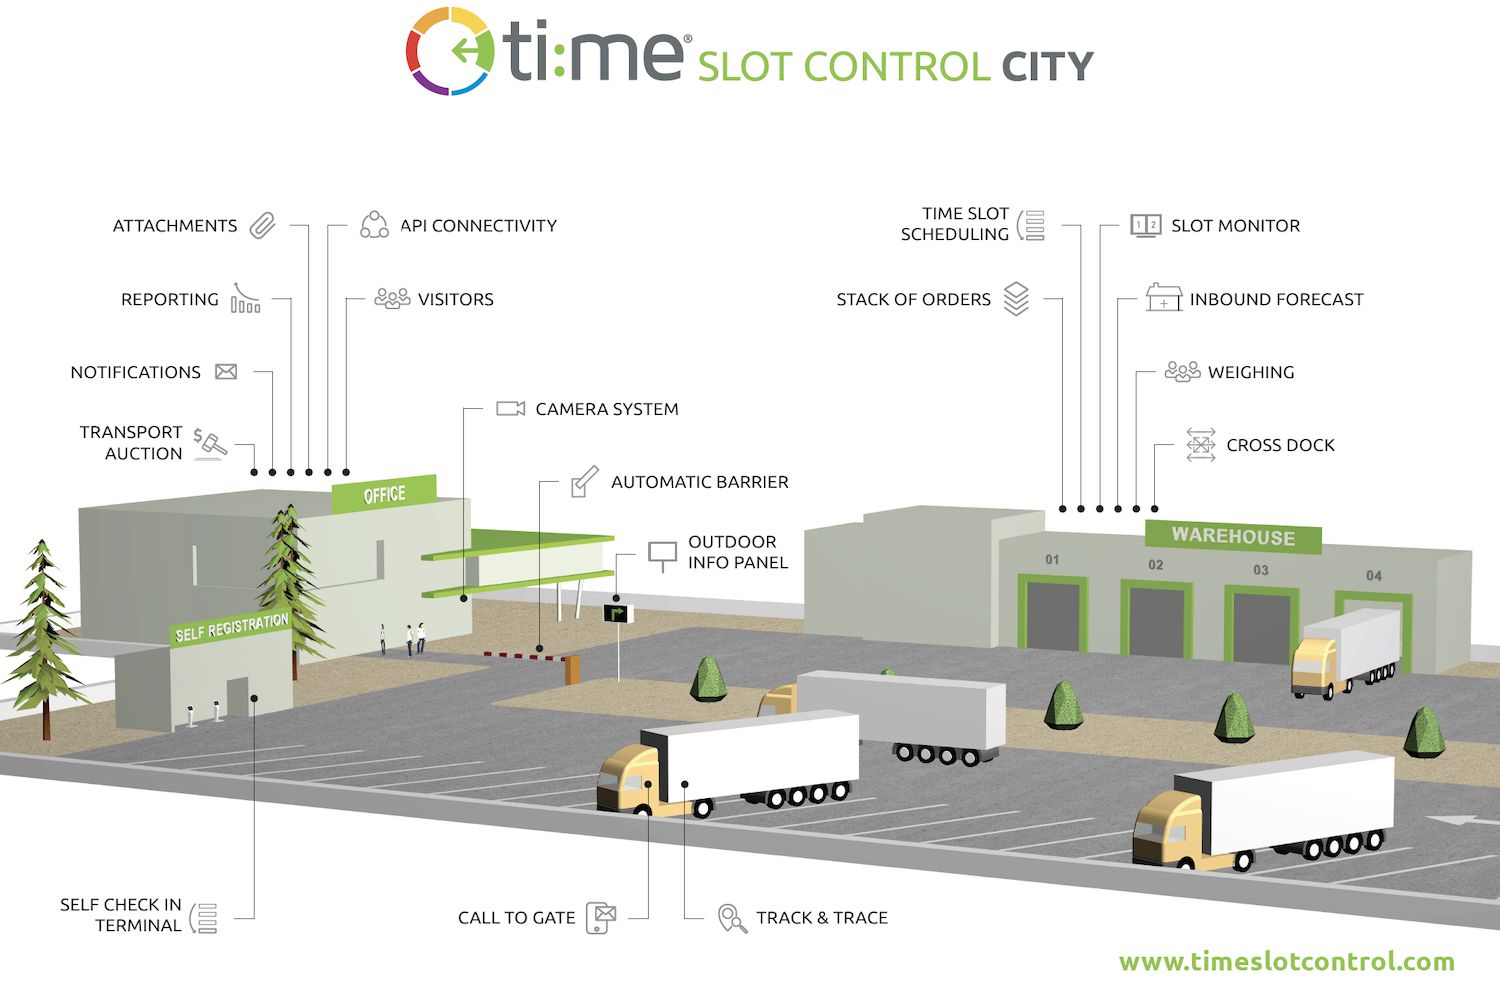 We present Time Slot Control City